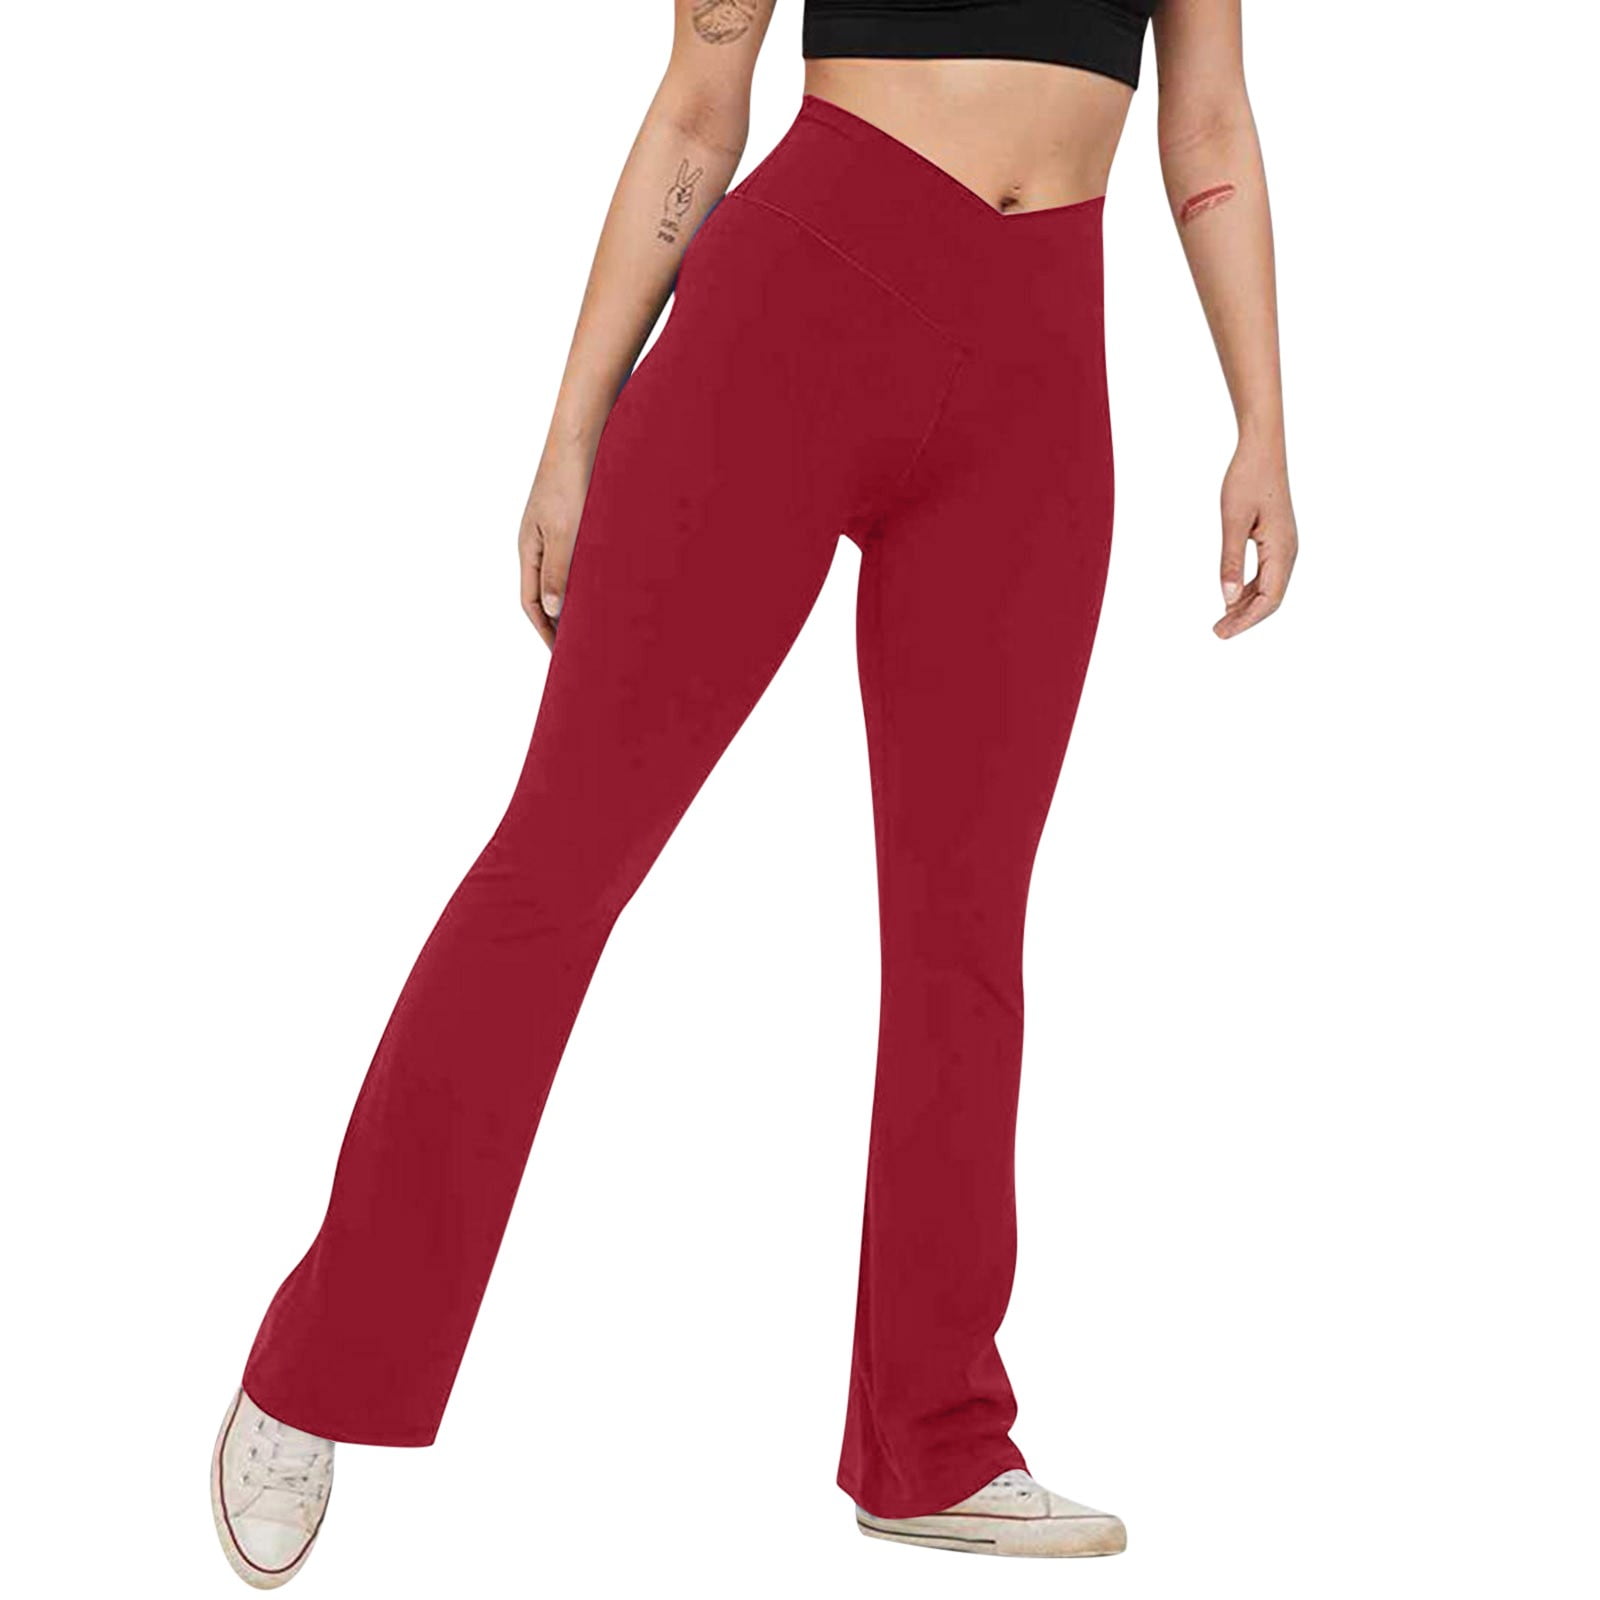 UHUYA Women Flare sweatpants Wide Leg Pants Casual Slim High Elastic Waist  Solid Color Sports Yoga Flare Pants Red M US:6